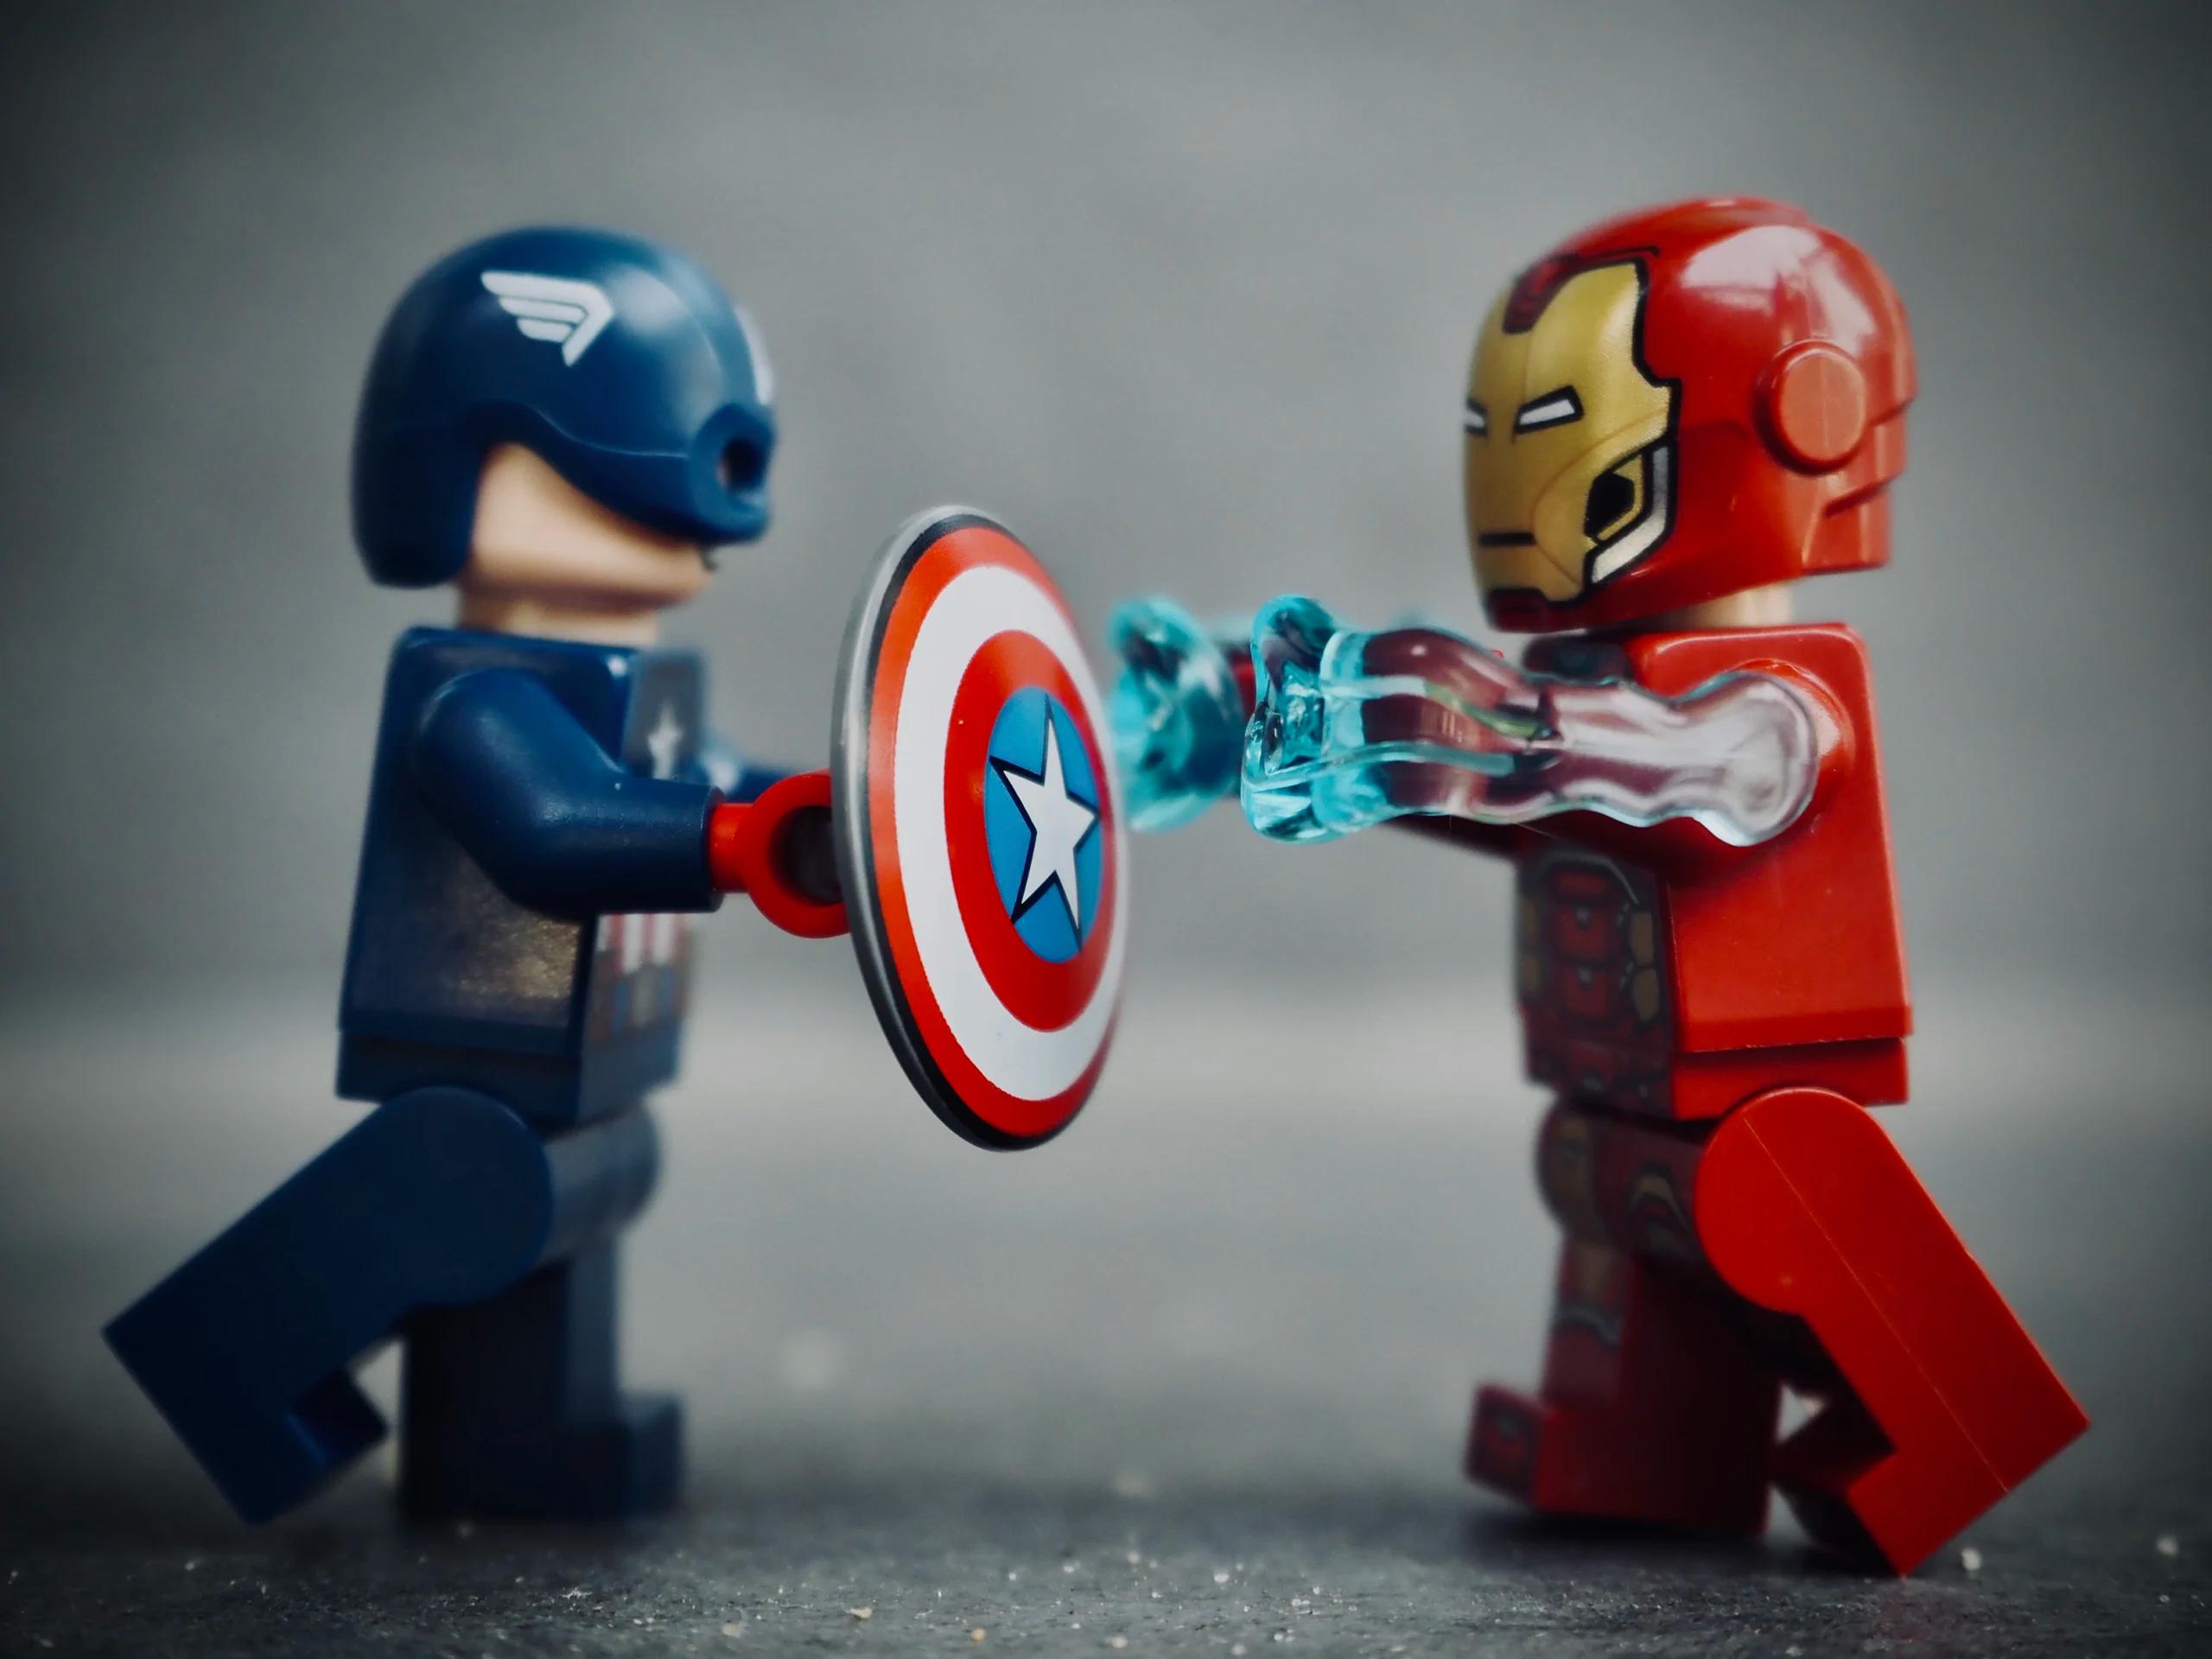 Captain America vs Iron Man action figure